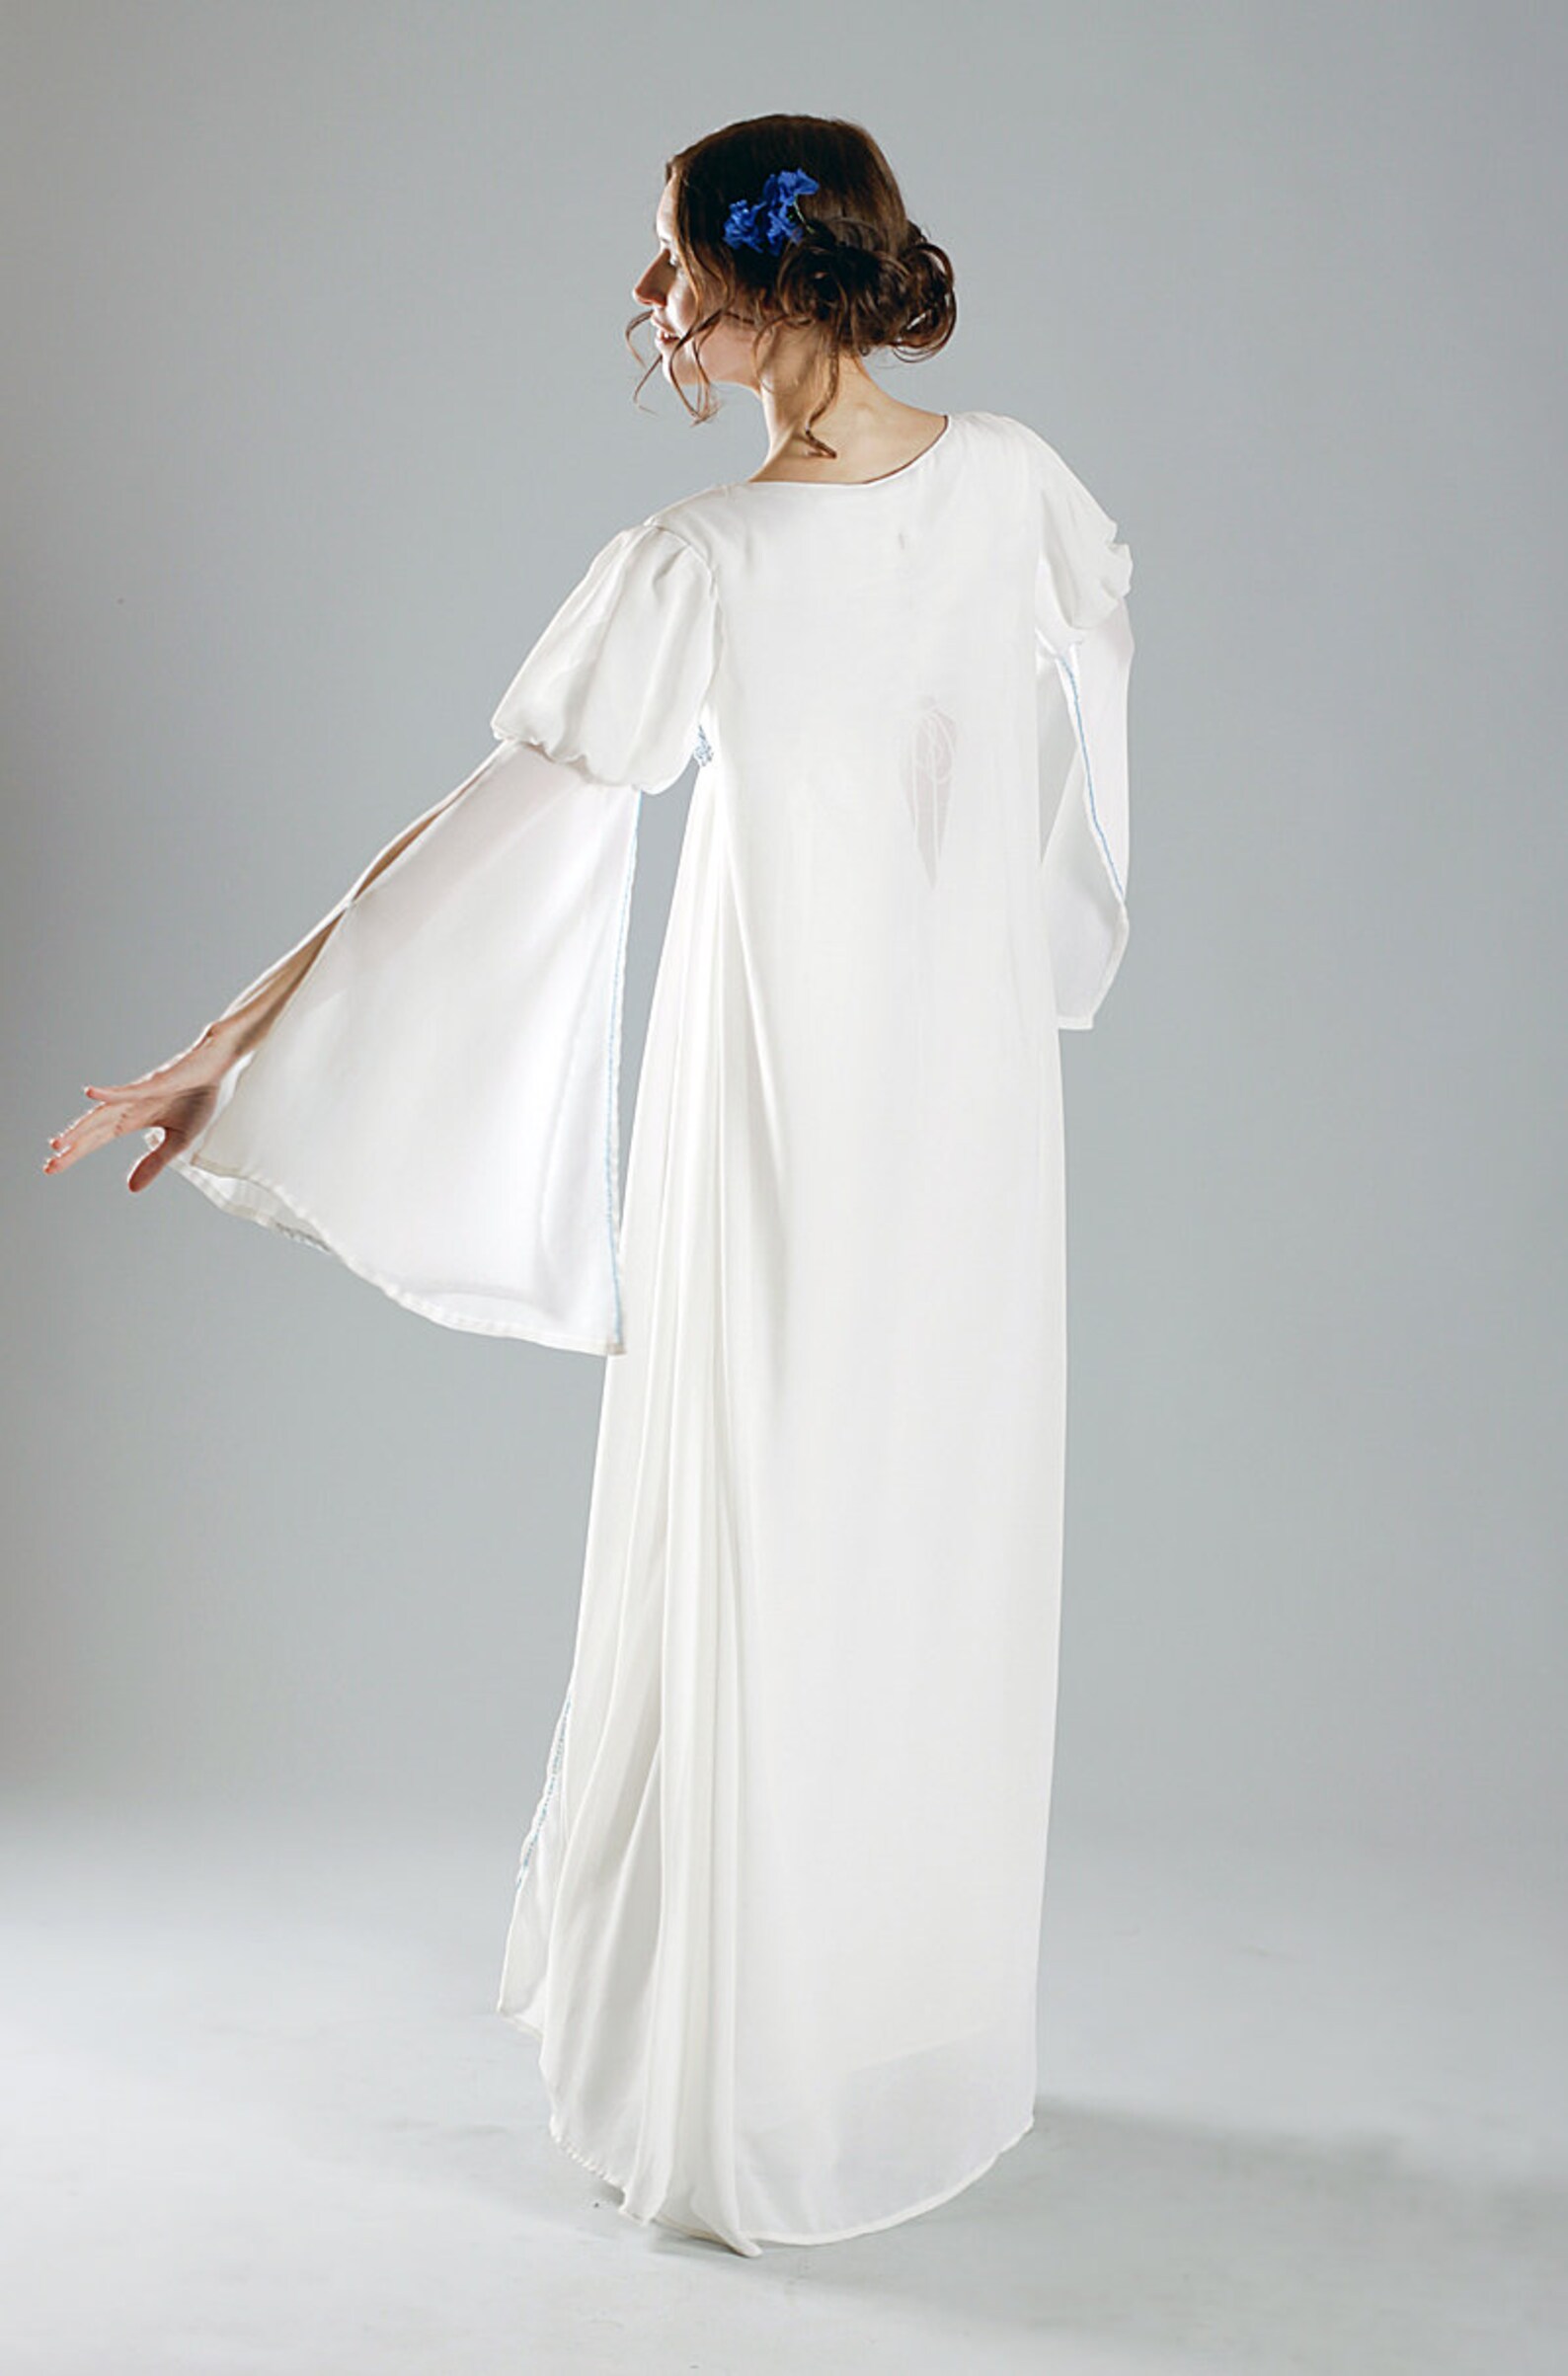 White elven dress Fantasy wedding dress Made to order | Etsy